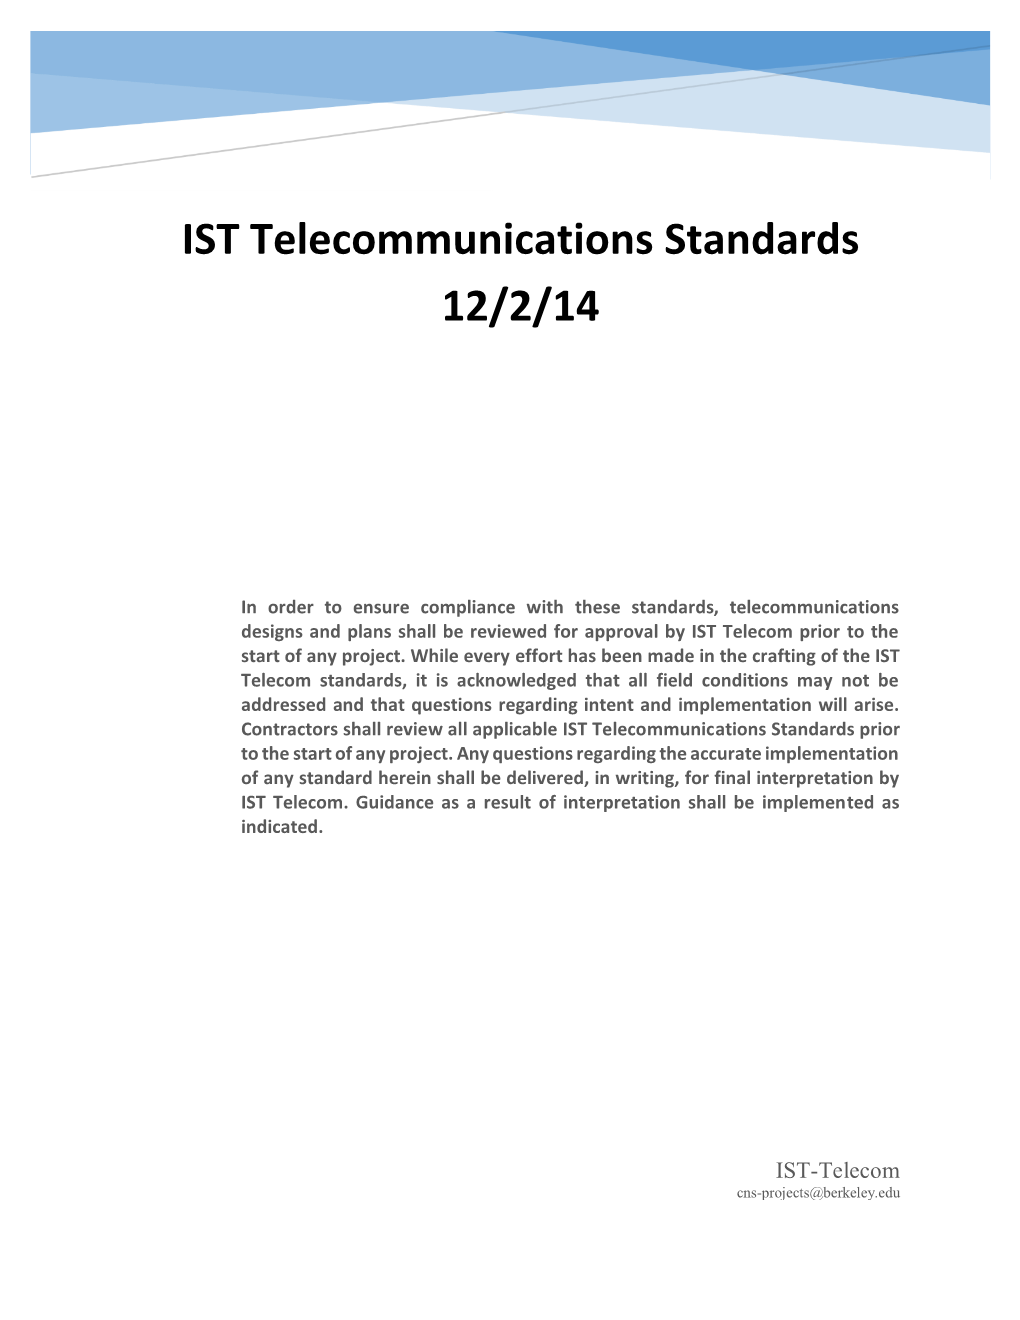 IST Telecommunications Standards 12/2/14